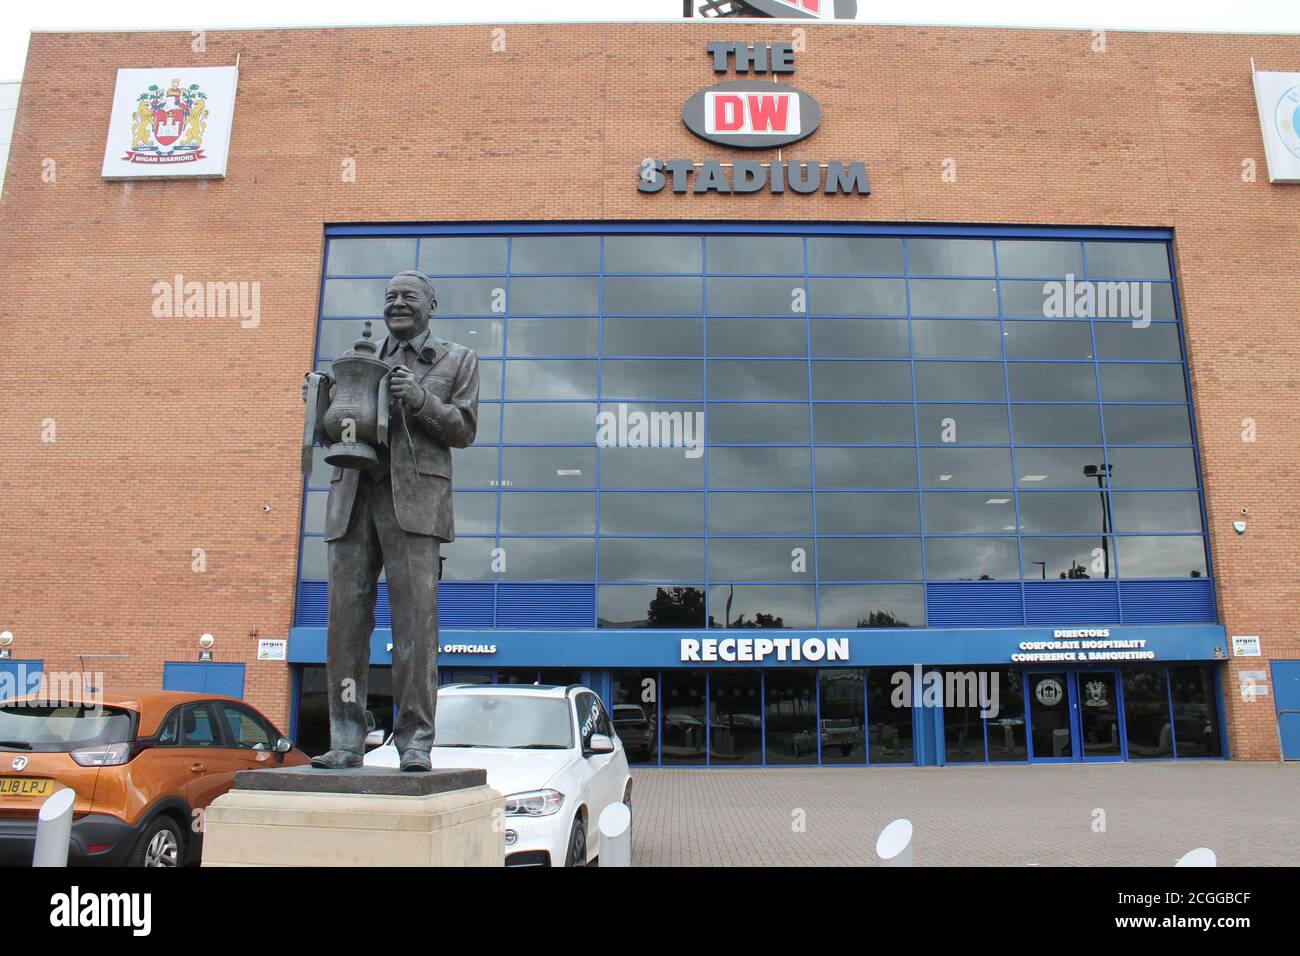 Wigan Football Stadium, DW stadium entrance with Dave Whelan statue outside Stock Photo